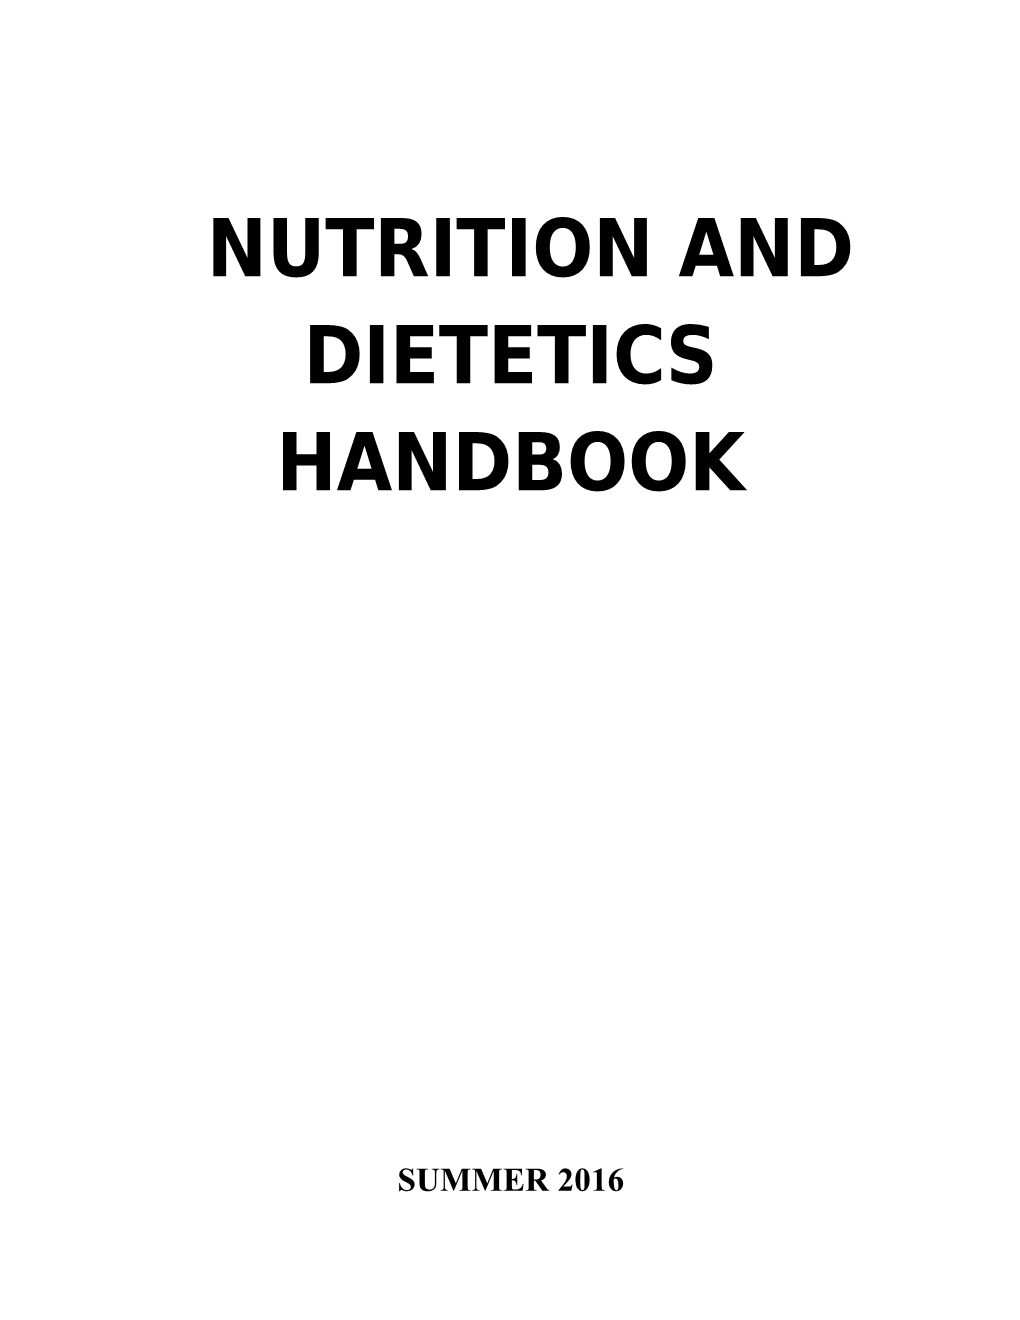 Nutrition and Dietetics Handbook